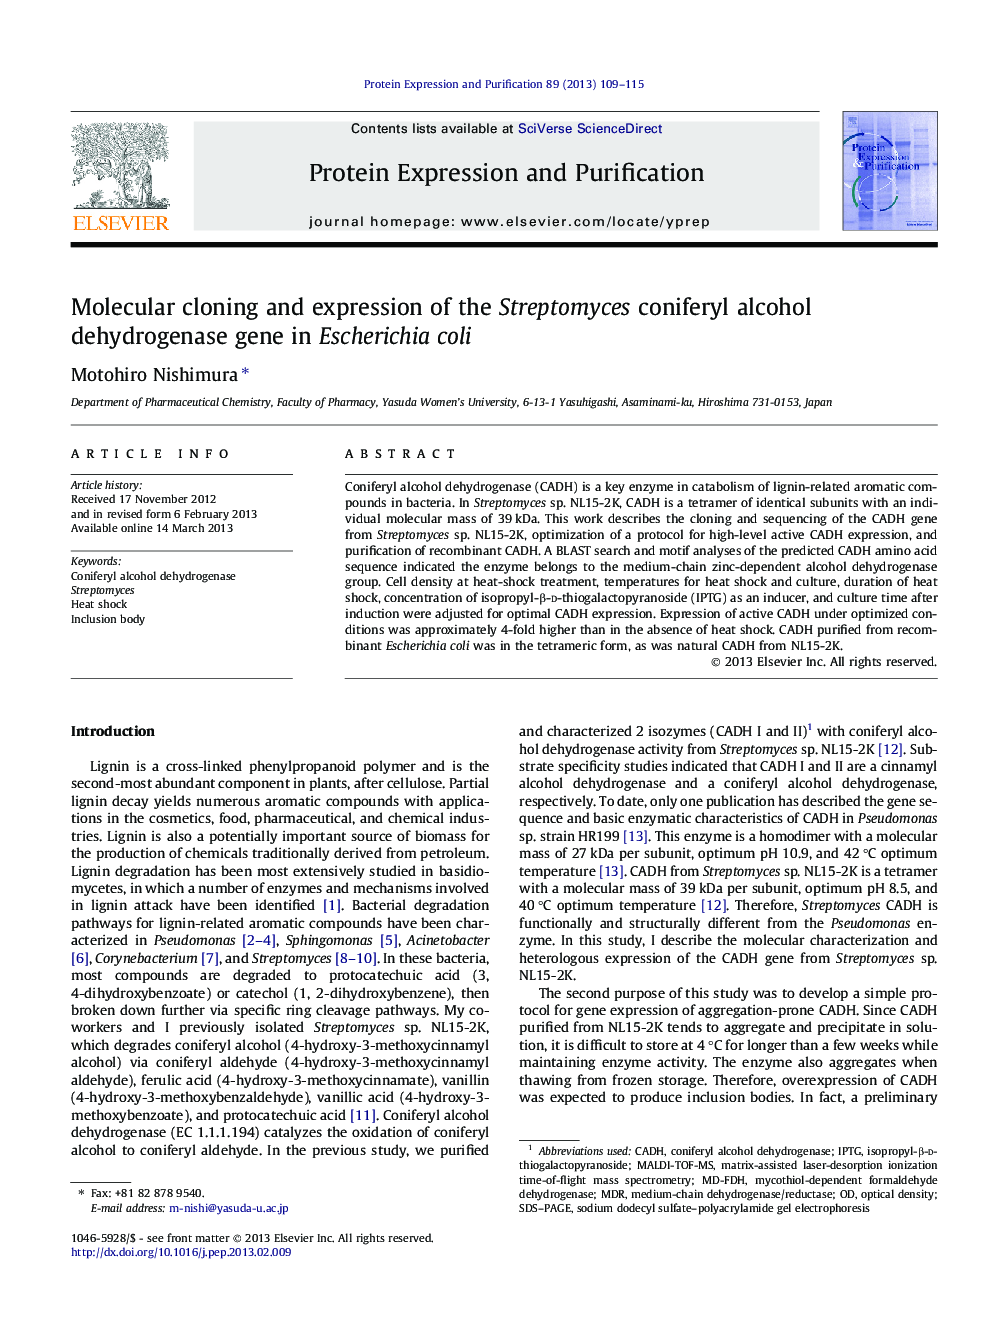 Molecular cloning and expression of the Streptomyces coniferyl alcohol dehydrogenase gene in Escherichia coli